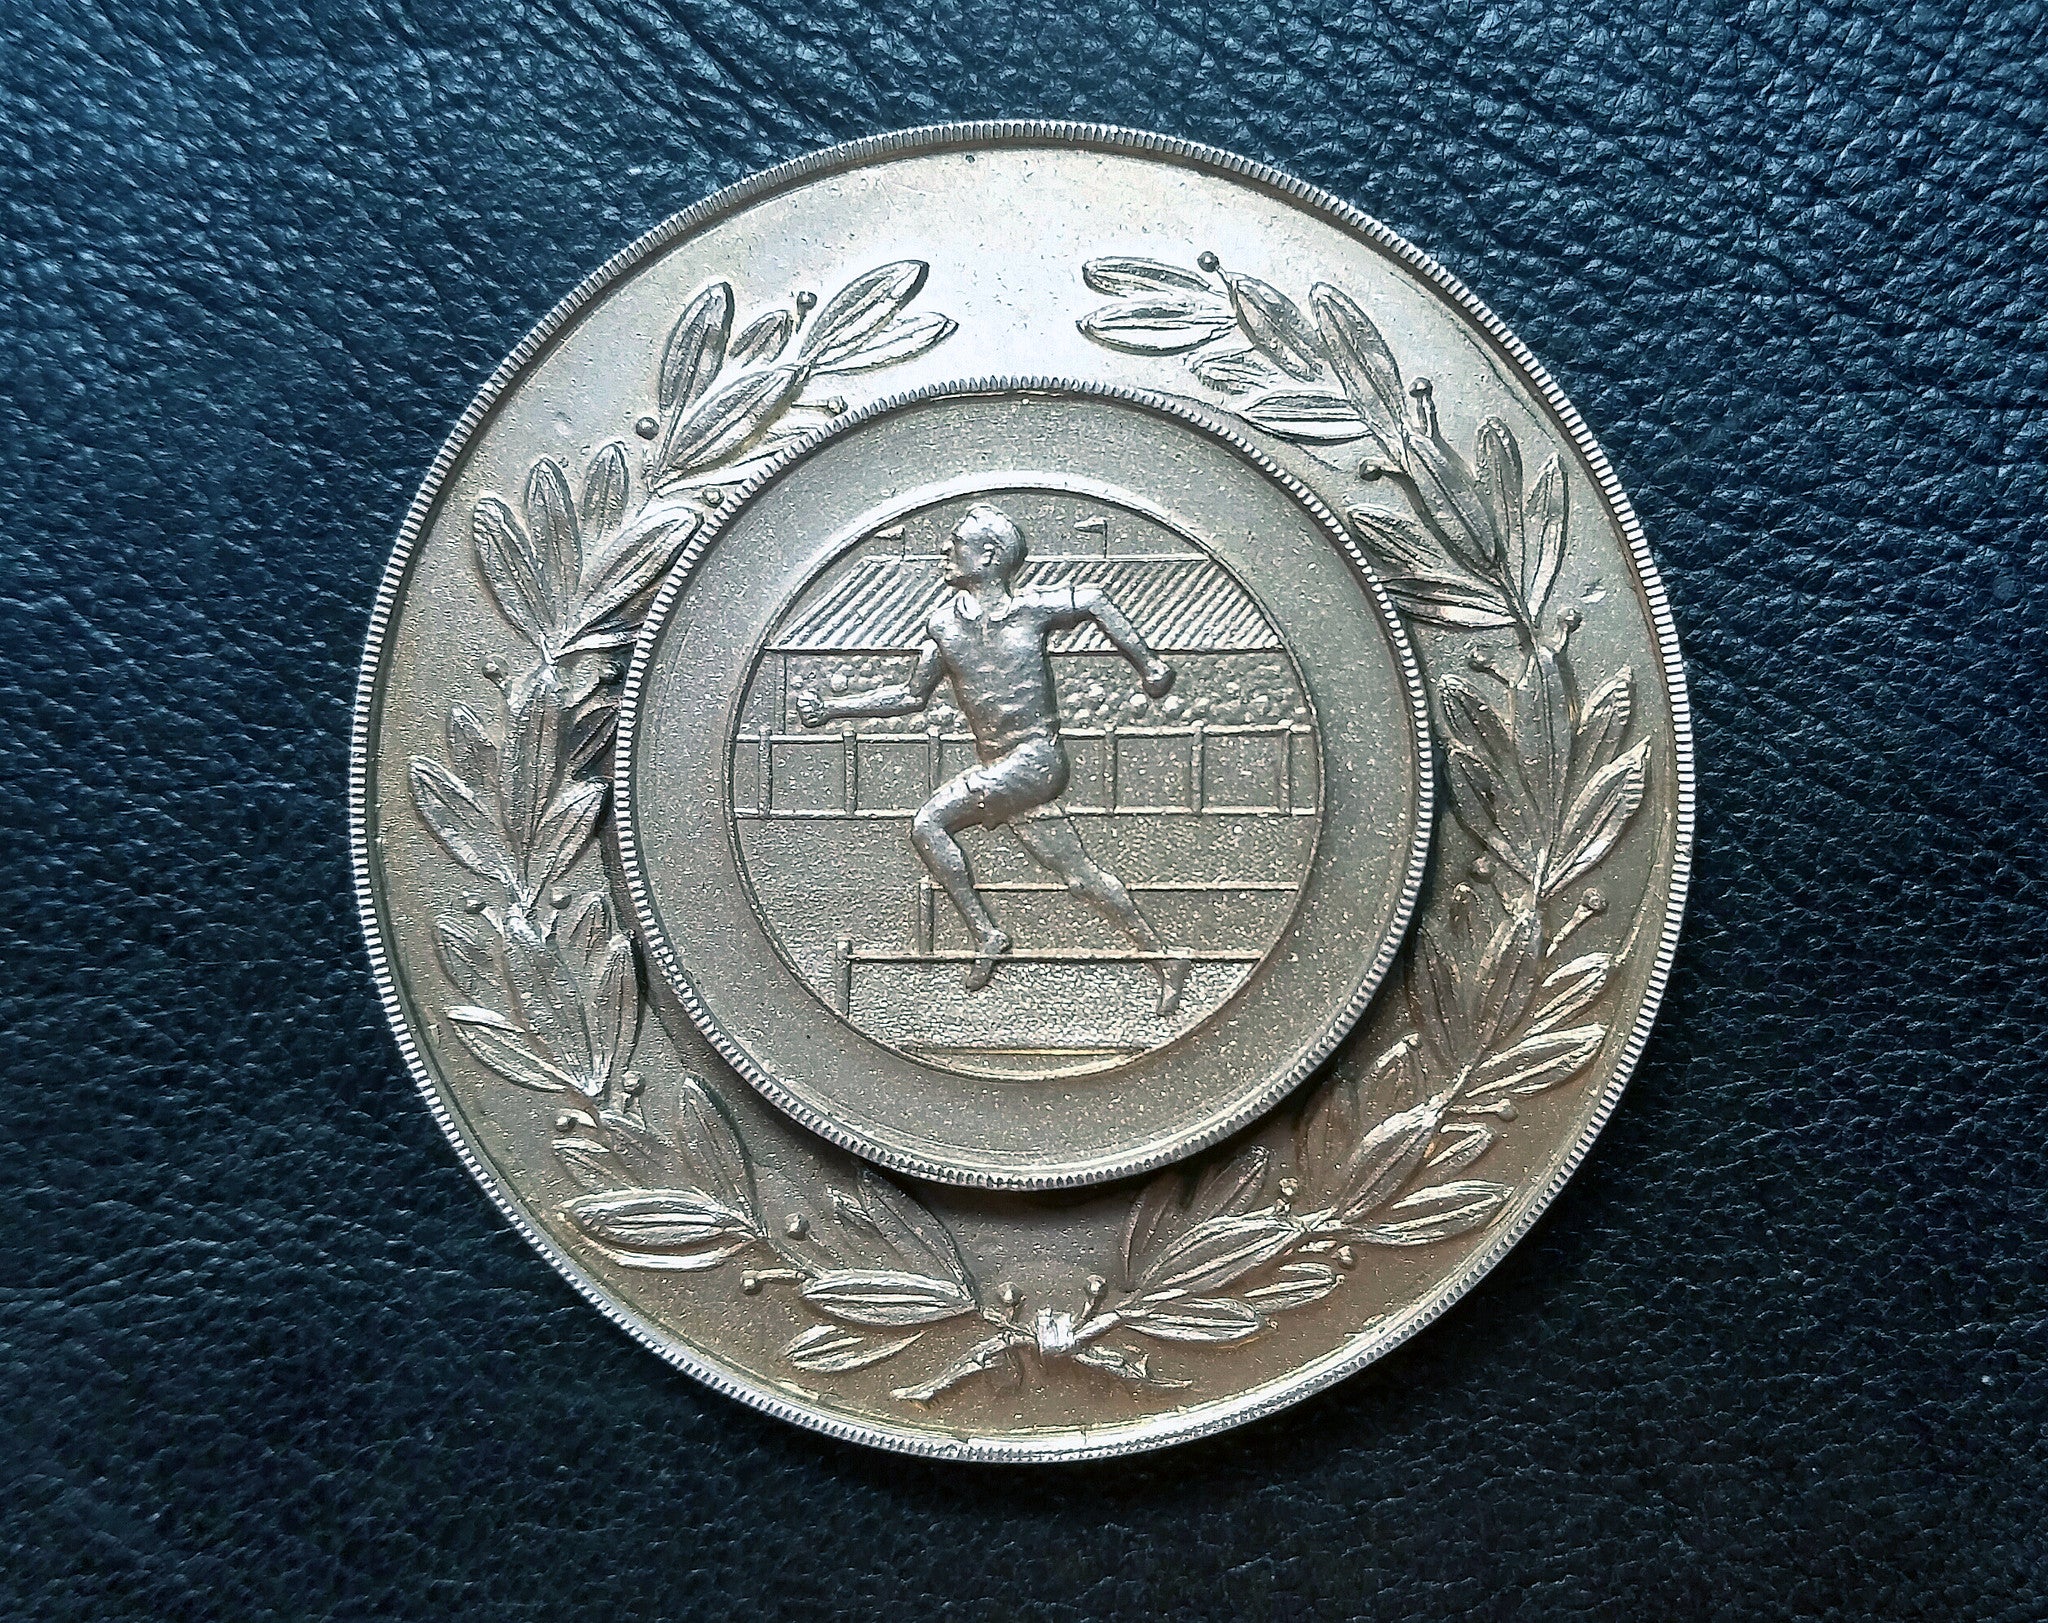 American Athlete Silver Medal obverse